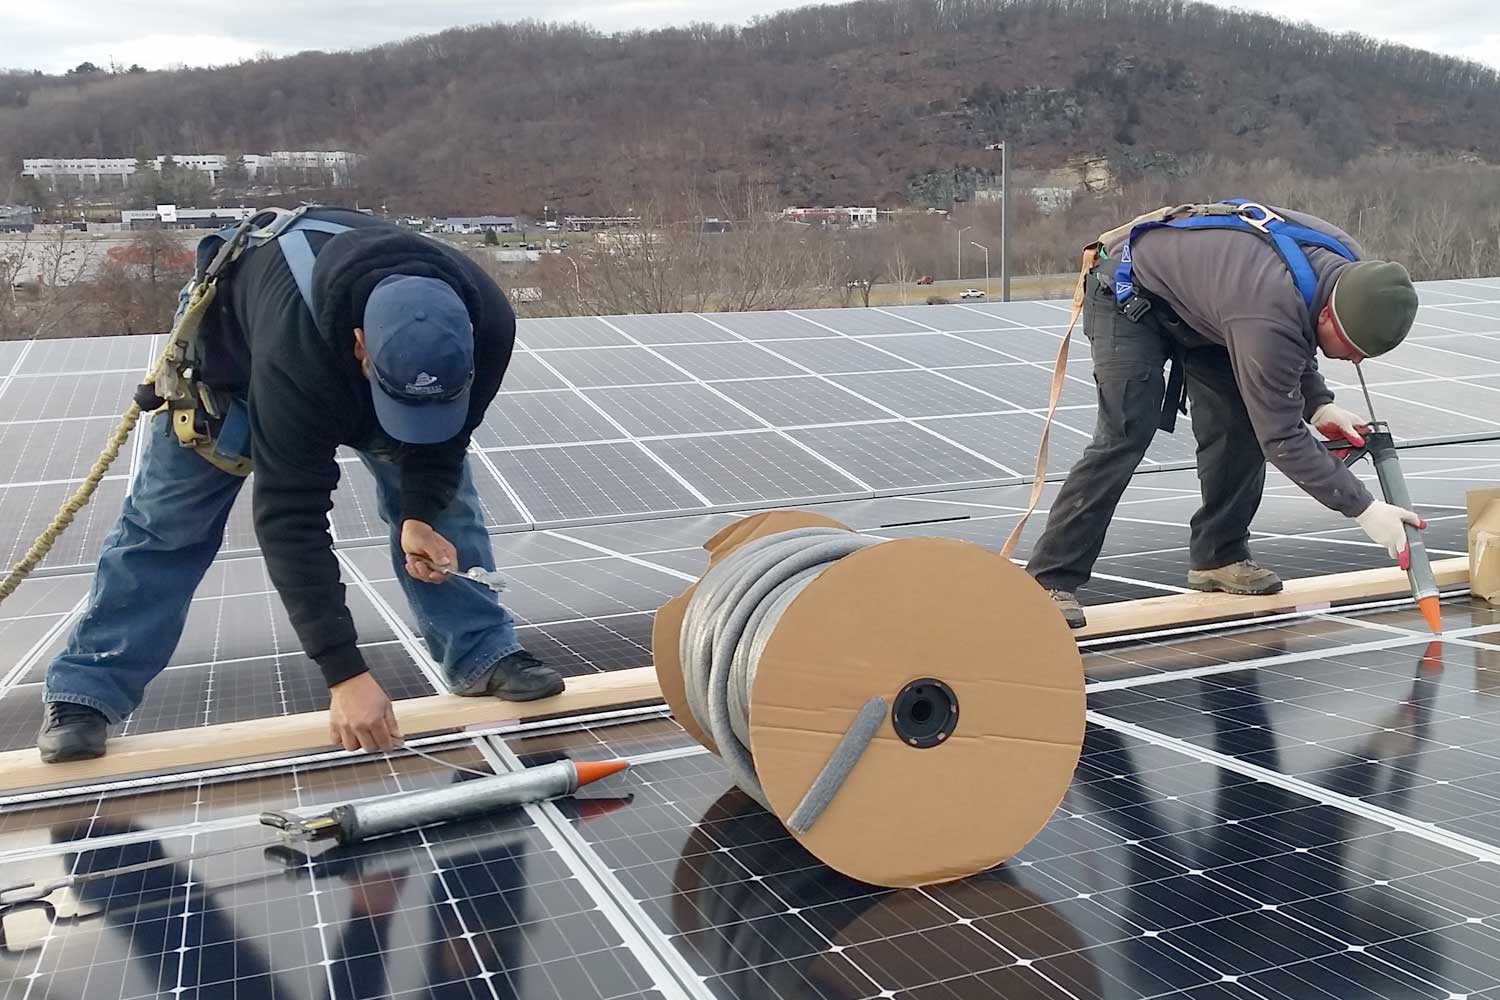 Presto technicians applying waterproofing solution to current solar panel installation